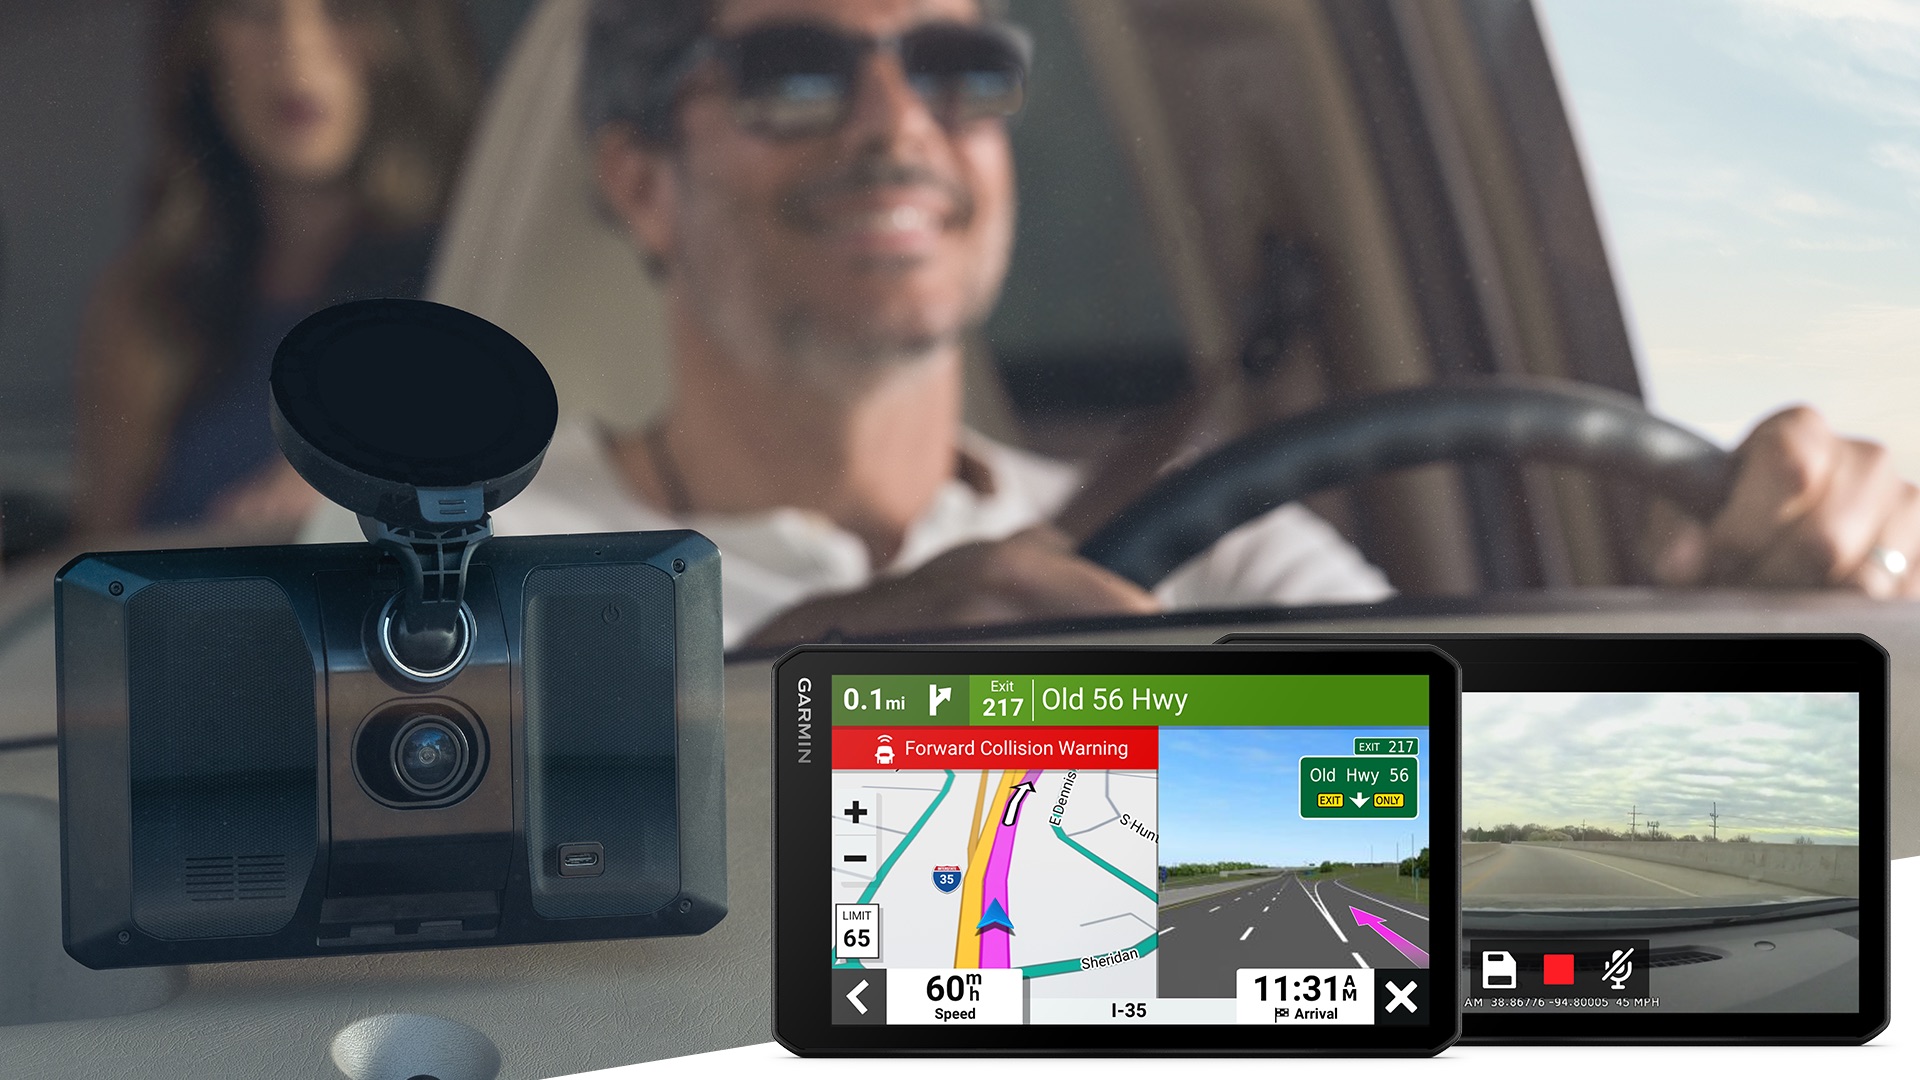 Garmin announces the Garmin DriveCam 76 & RVcam 795 all-in-one navigators